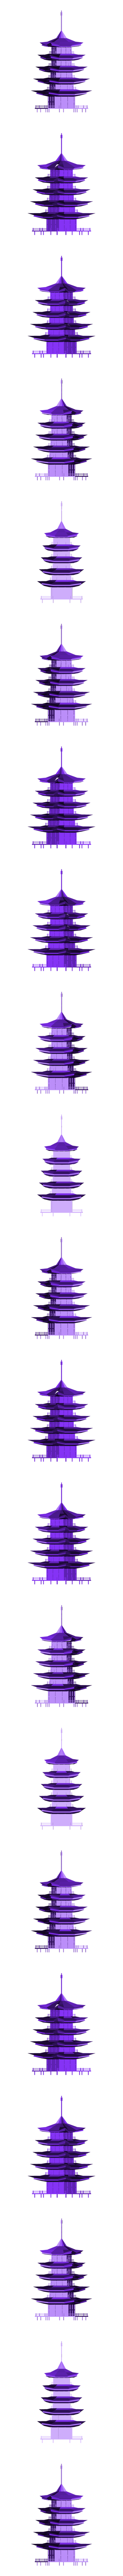 Pagoda.obj Download free OBJ file Pagoda • 3D printer object, Colorful3D